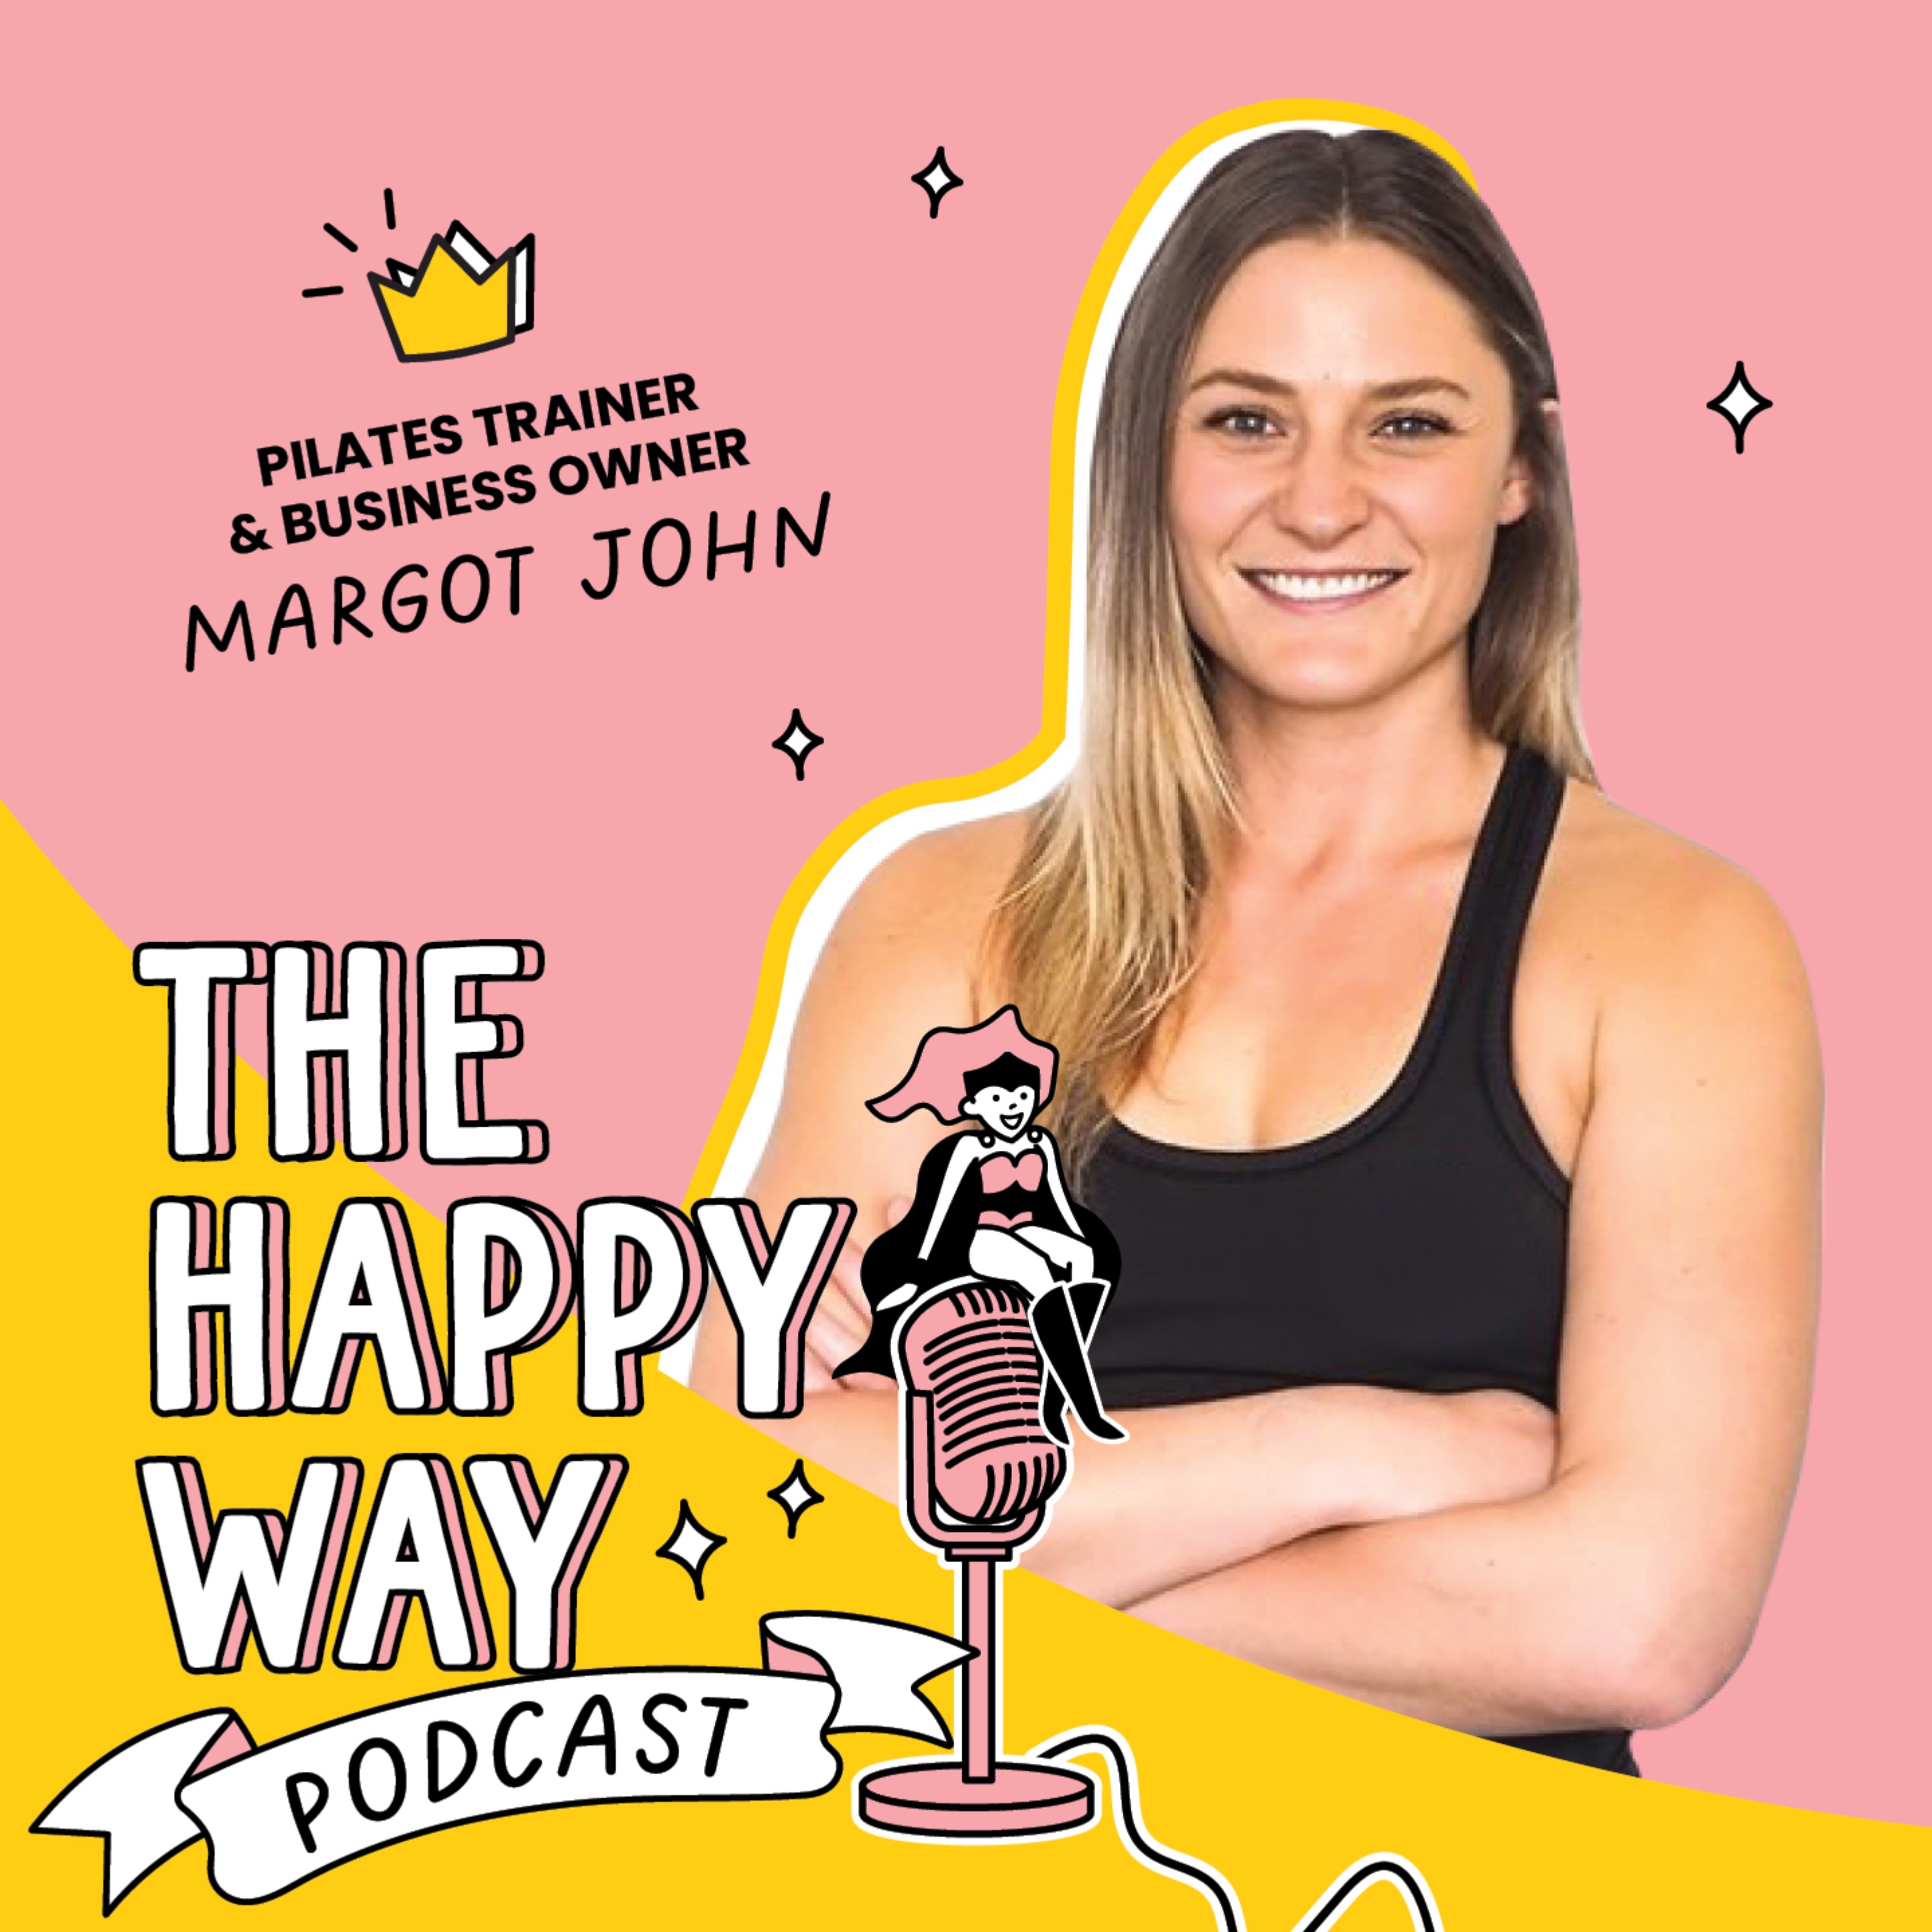 Margot John - Making it in the fitness world